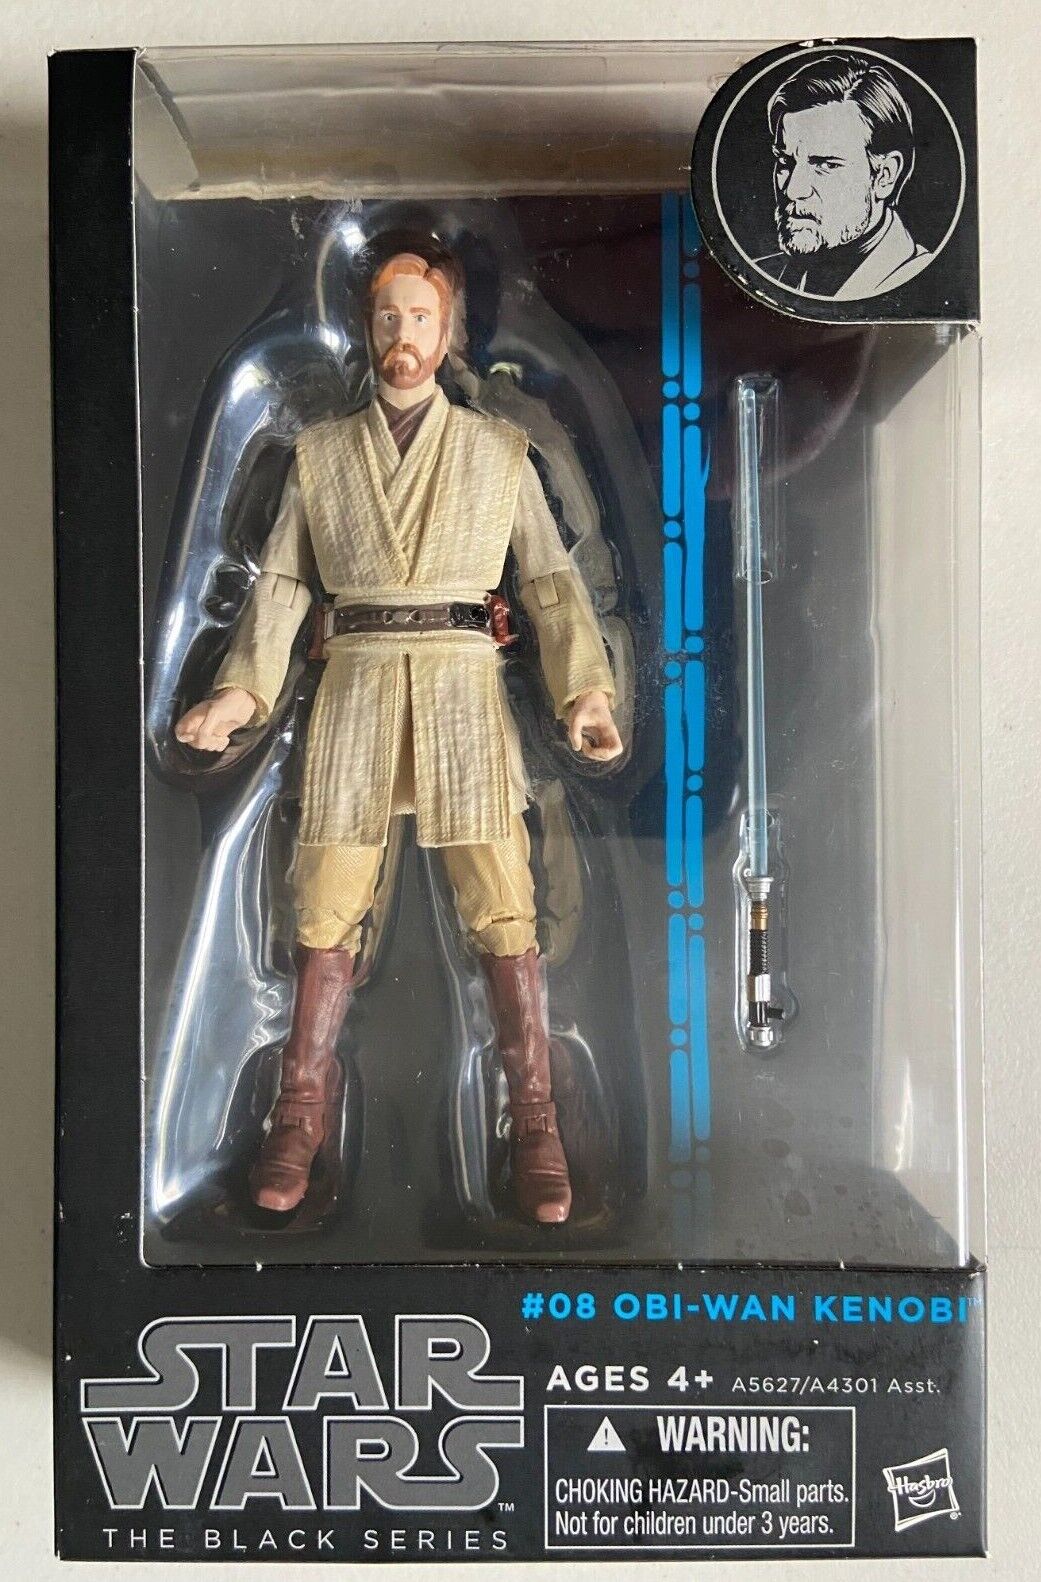 Star Wars - Black Series - Obi Wan Kenobi - Ewan McGregor - Black & Blue Box - 2014